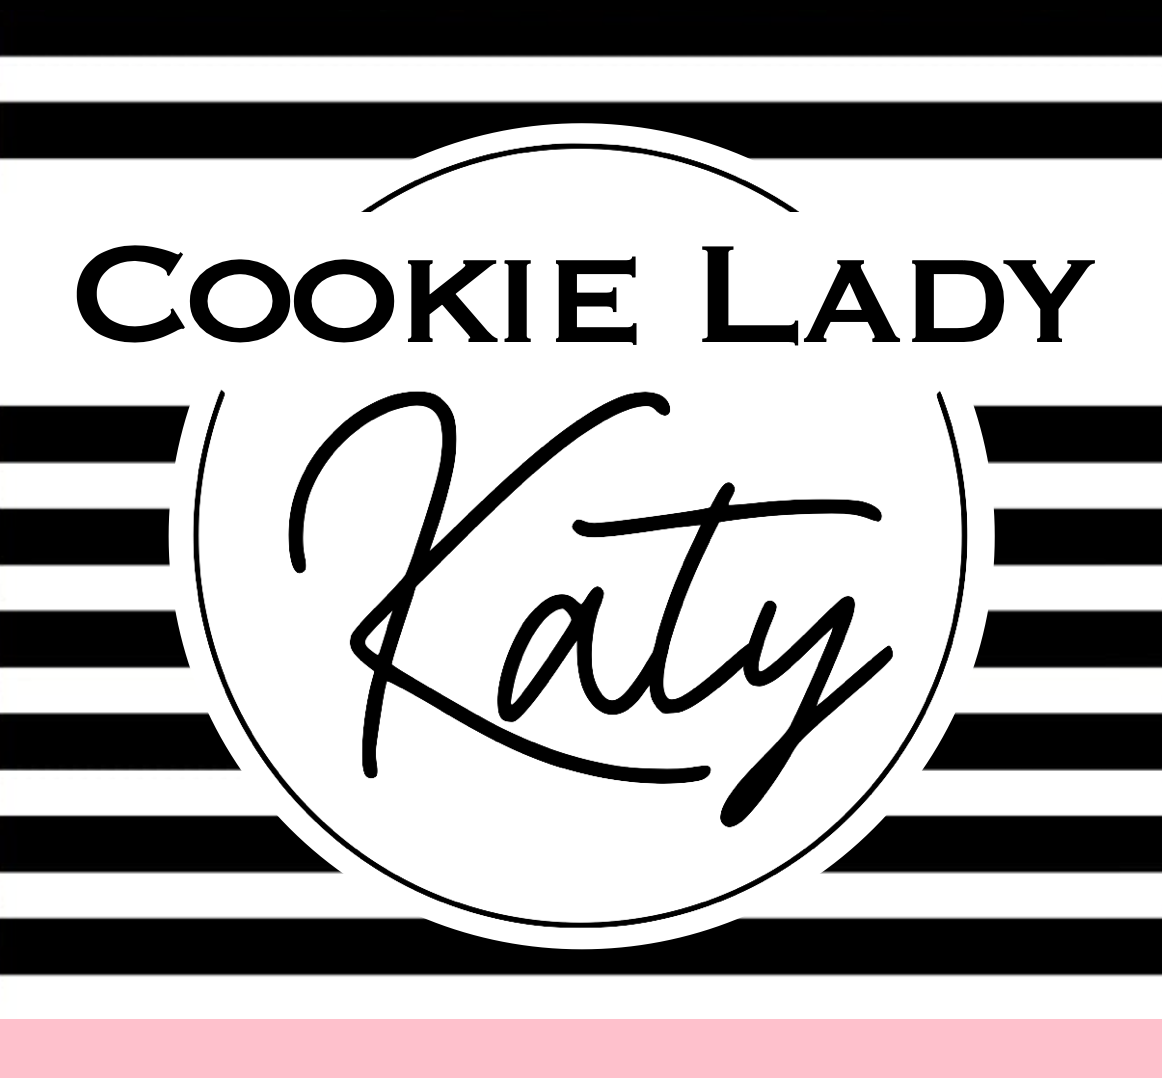 Katy_cookie